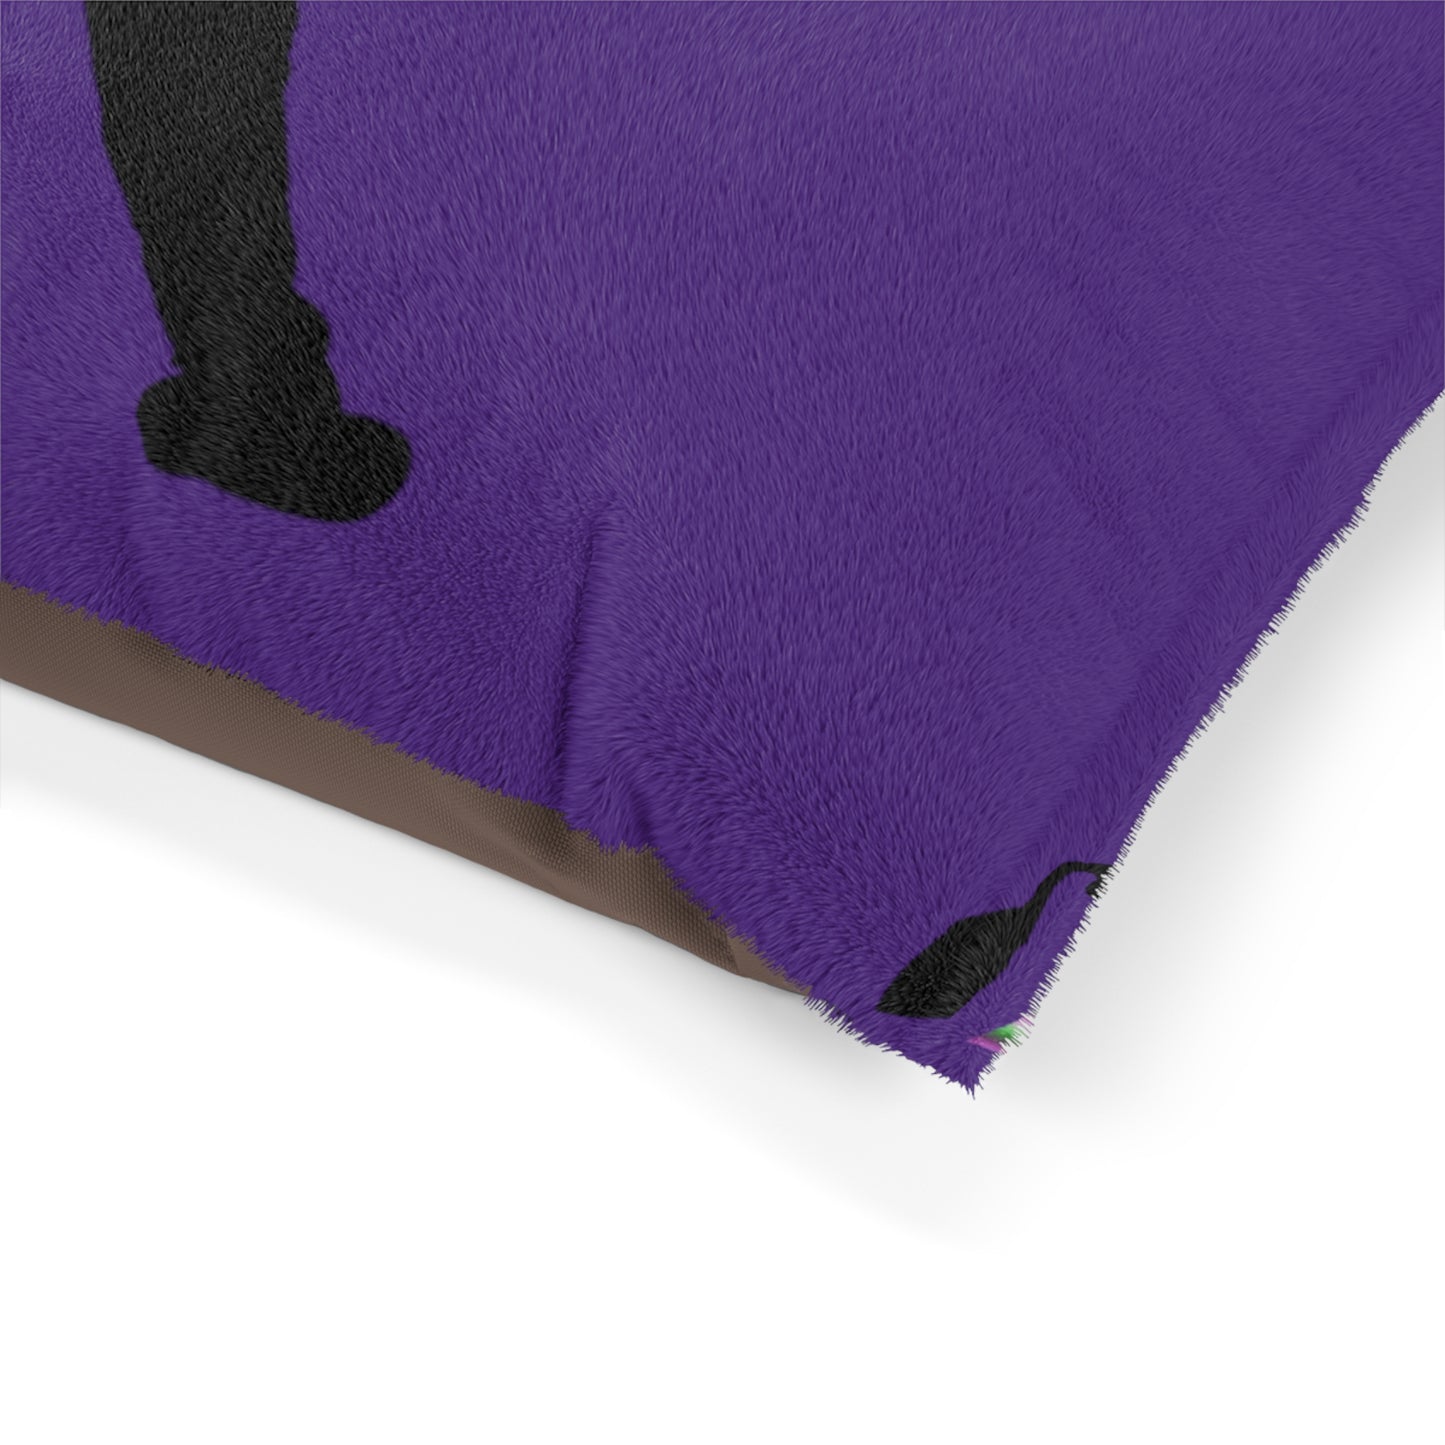 Pet Bed: Baseball Purple